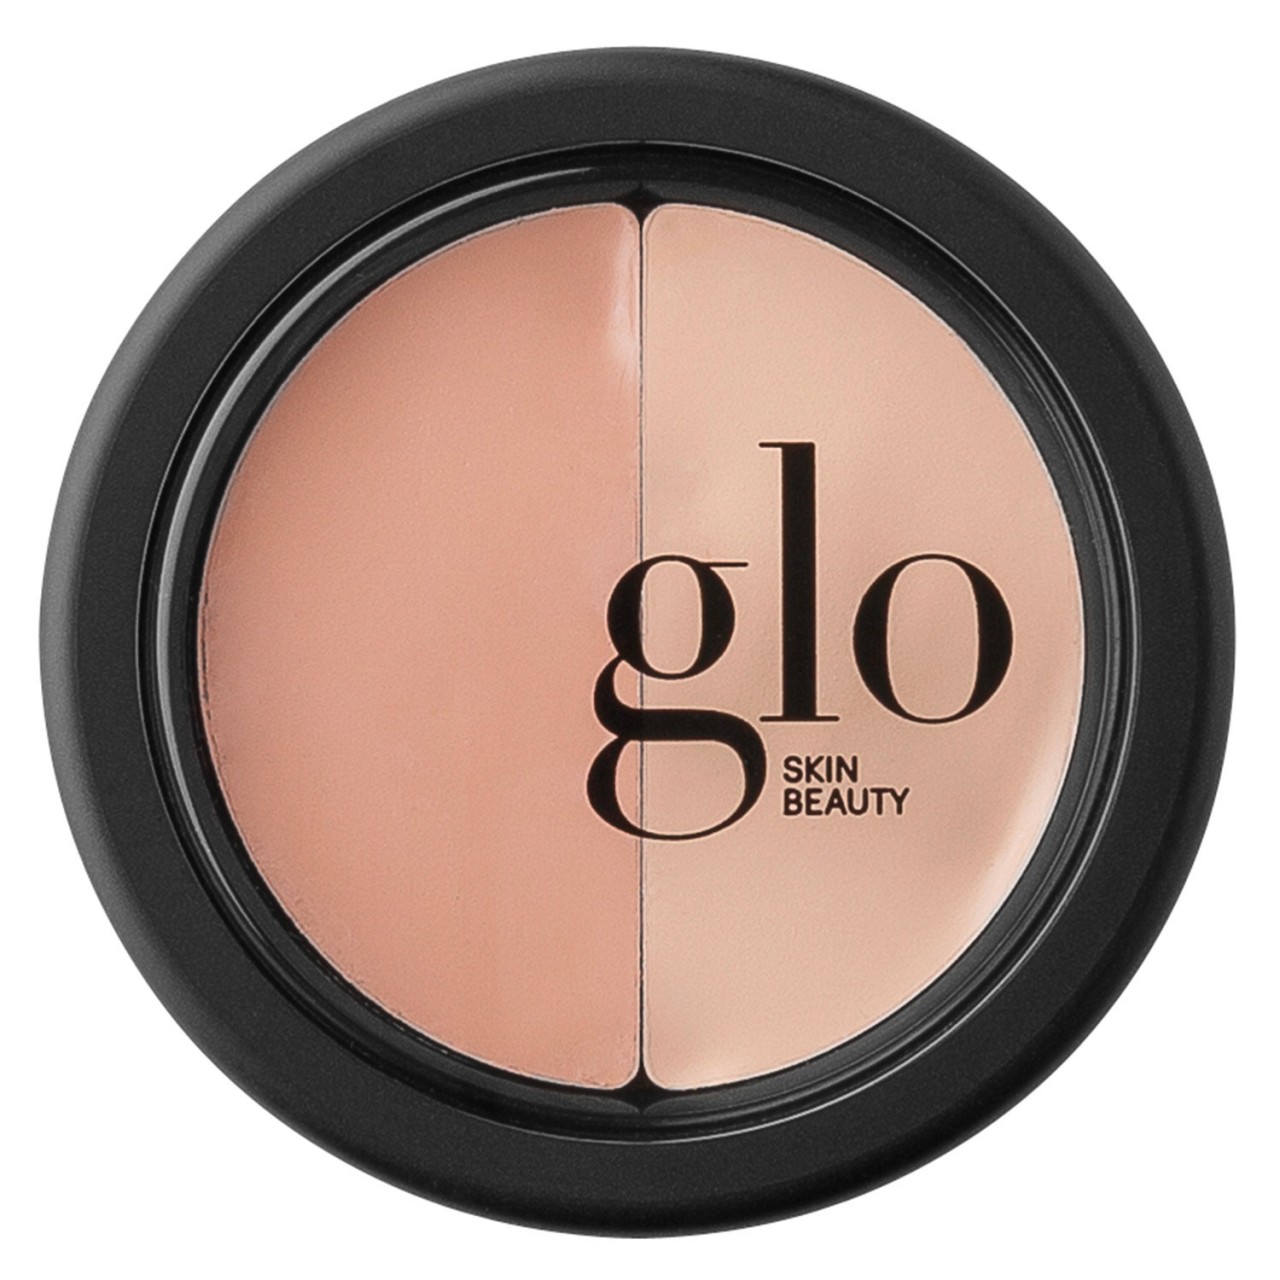 Glo Skin Beauty Concealer - Under Eye Concealer Beige von Glo Skin Beauty